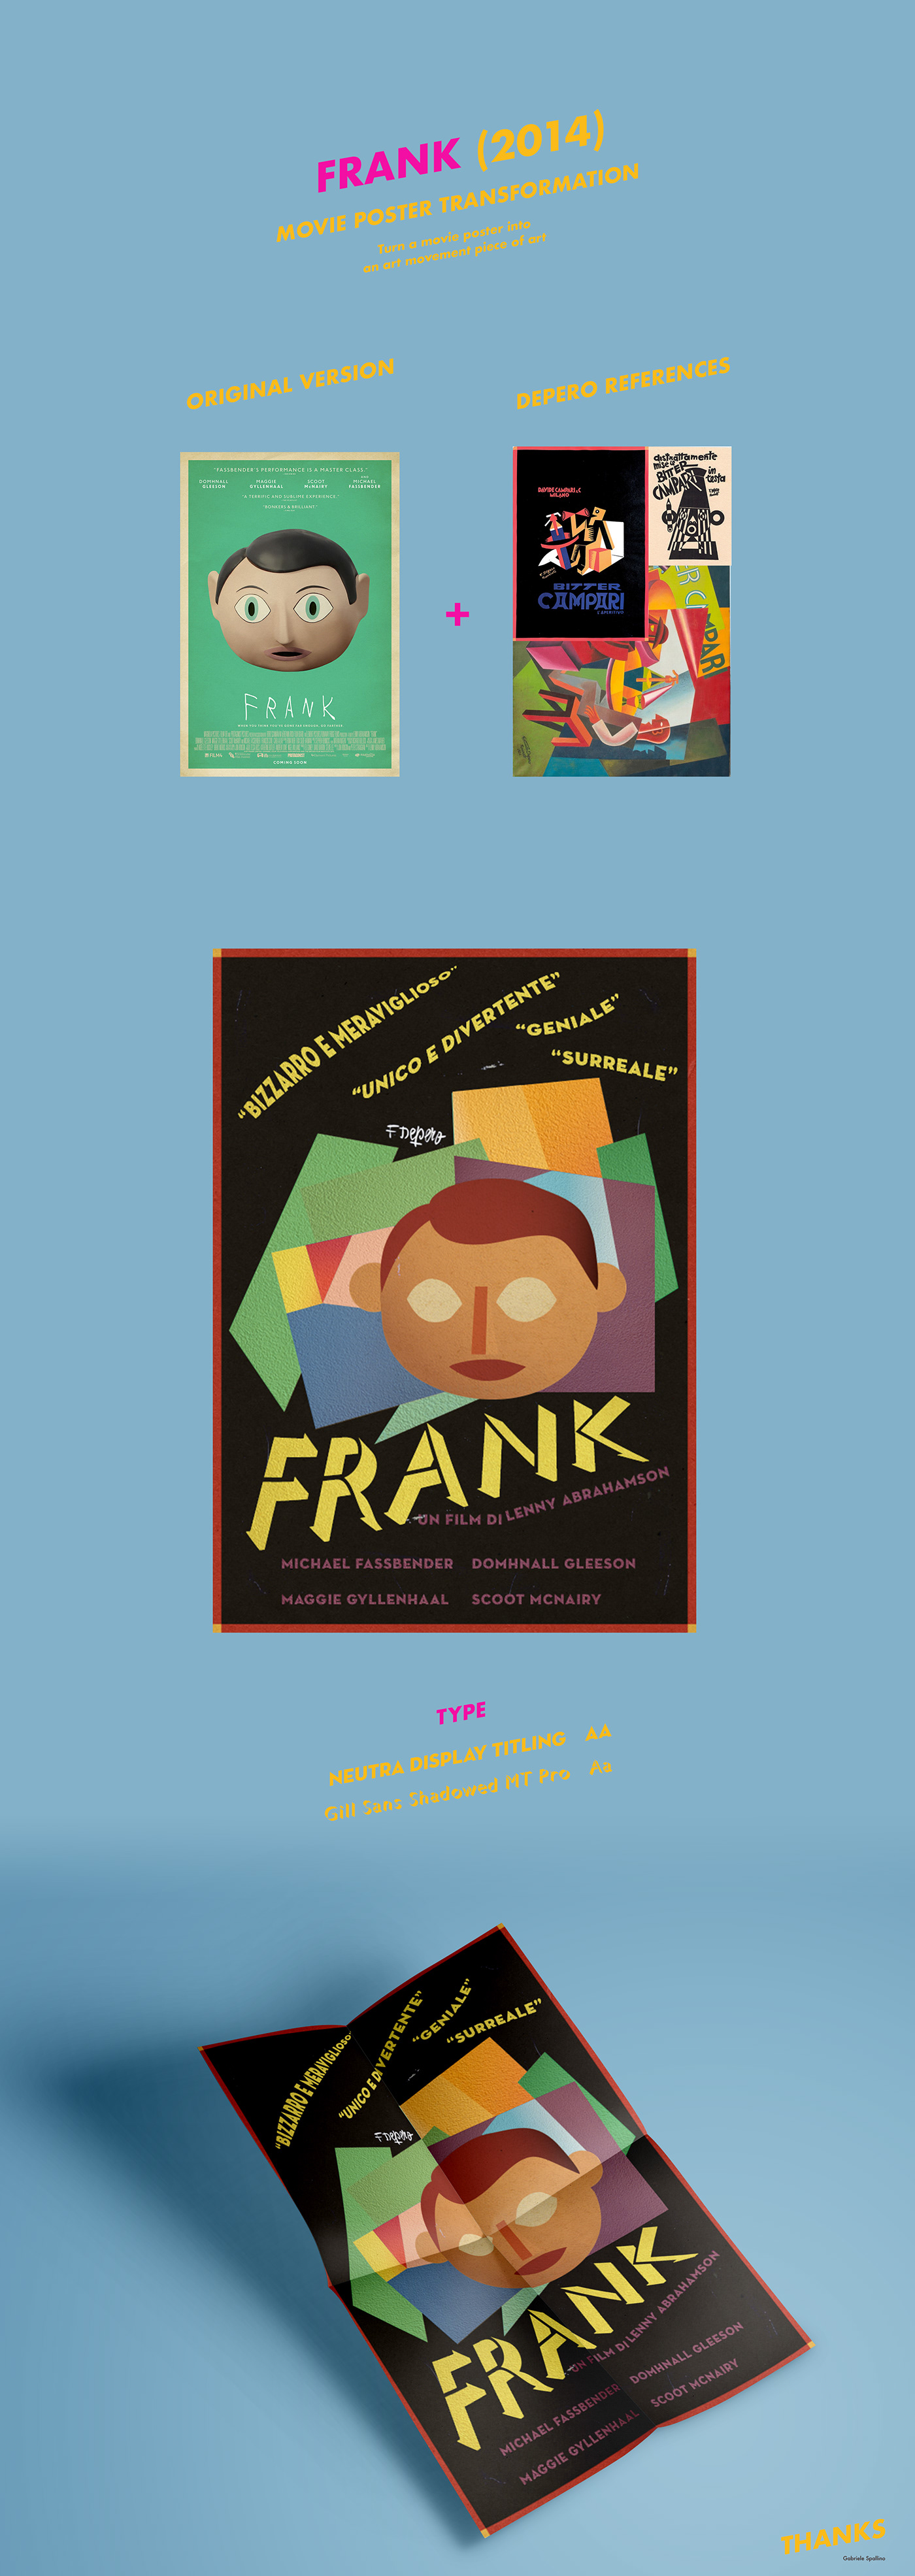 frank movie poster art Campari Depero Film   fanart Transformation movement